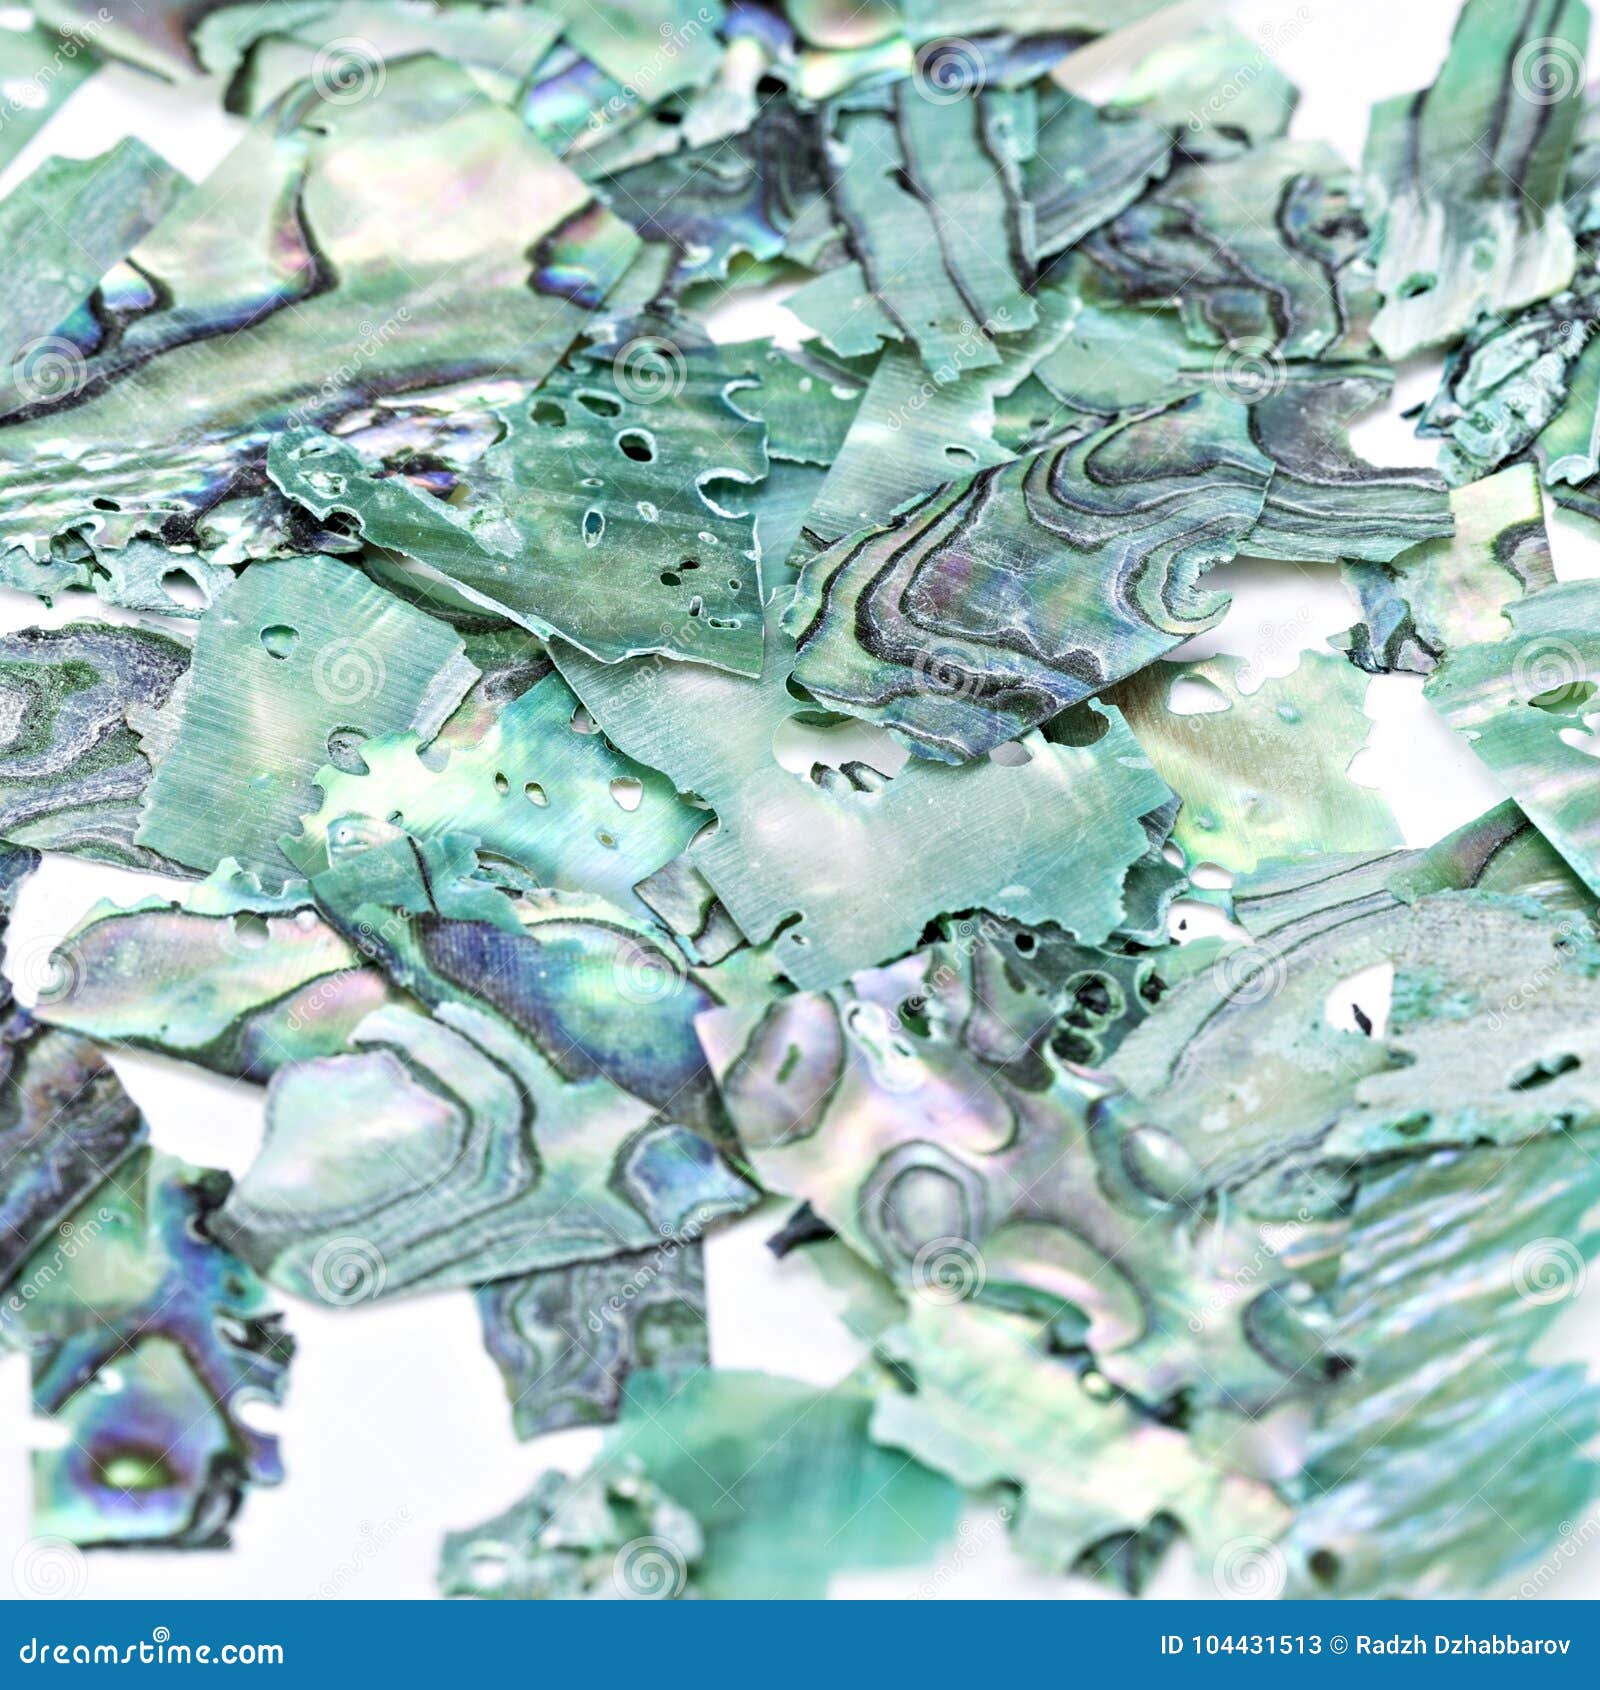 turquoise natural gemstone nacre seashells close-up, beautiful texture of gemstone